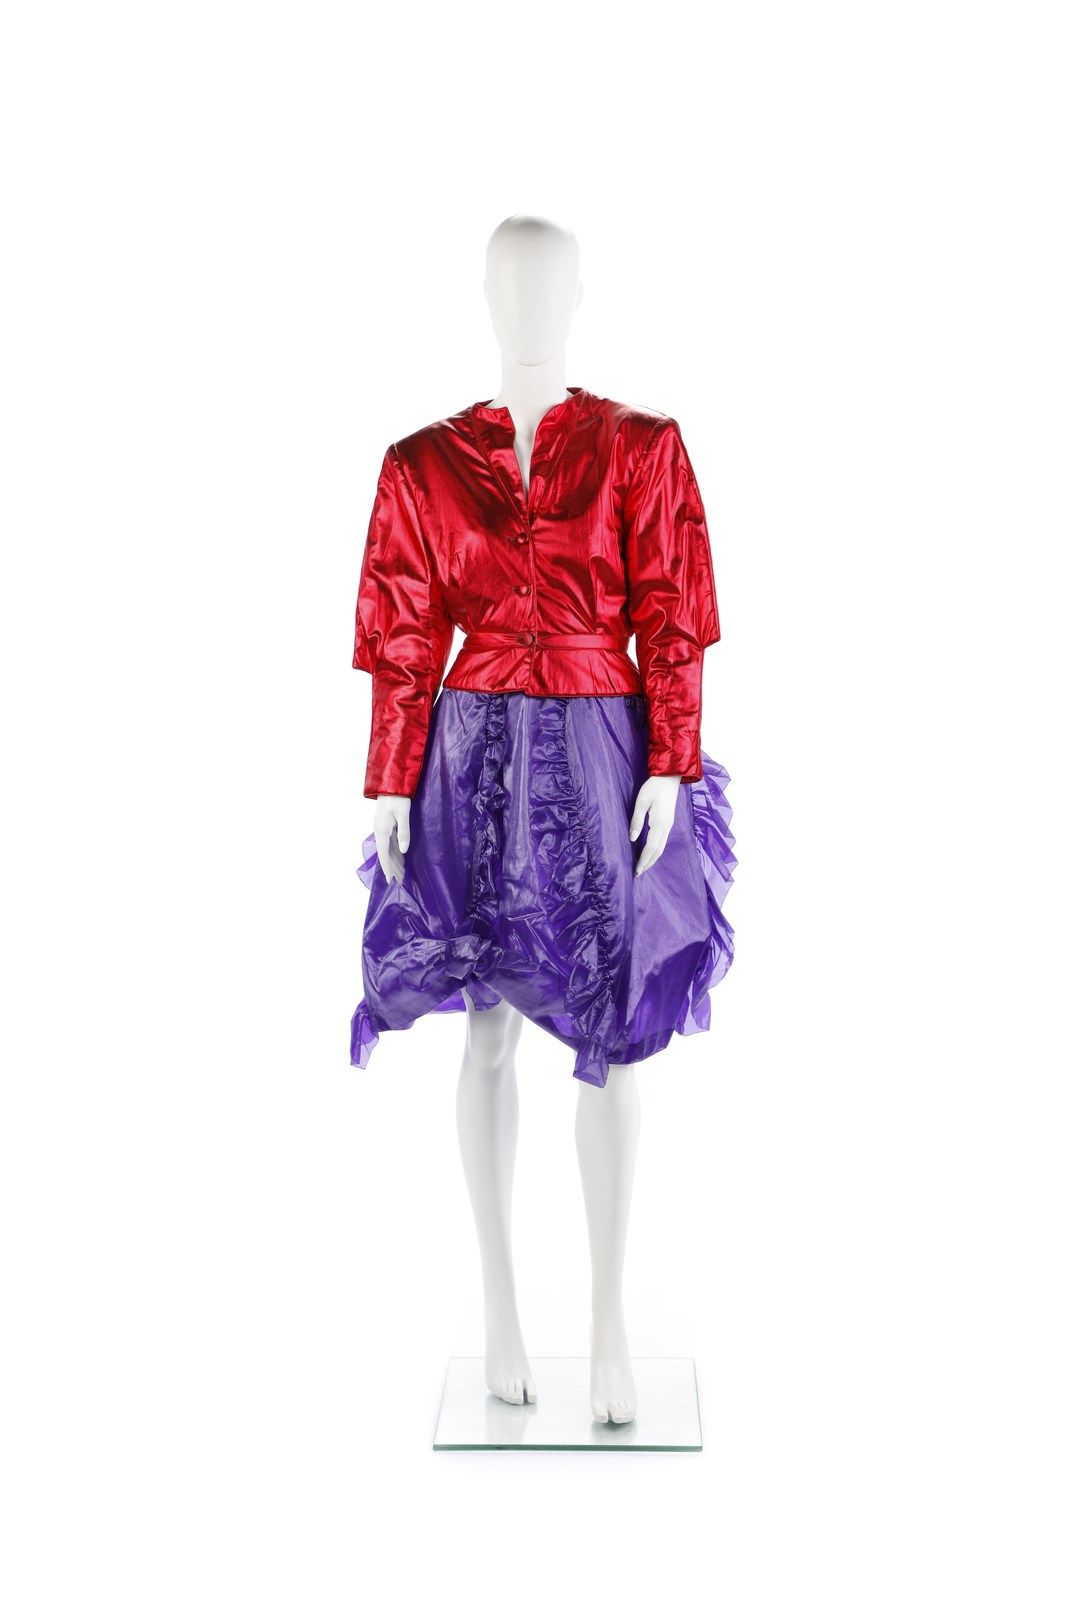 CINZIA RUGGERI Cinzia Ruggeri for Bloom. Iridescent red jacket size 40IT and pur&hellip;